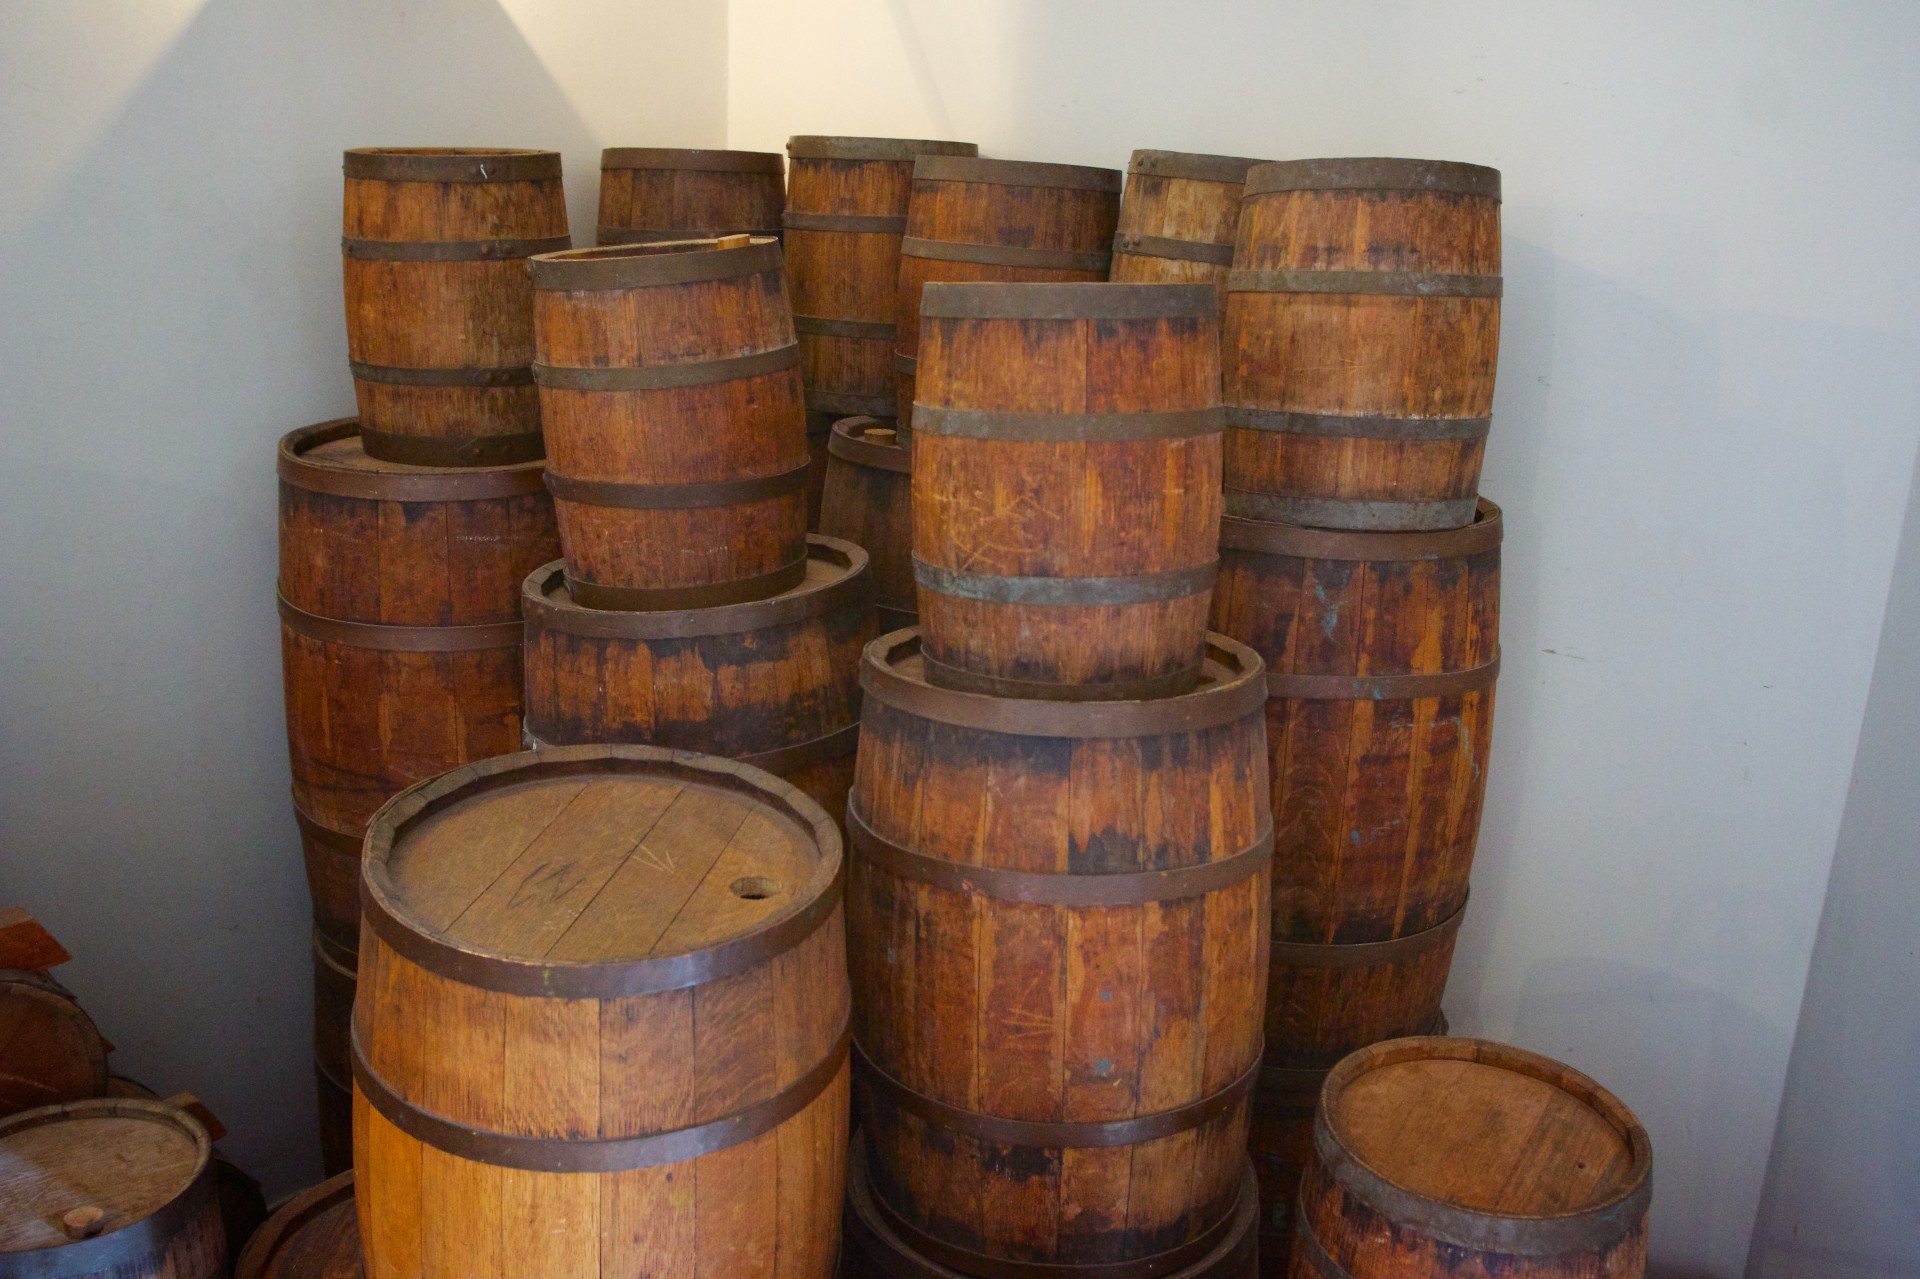 Wooden barrels store gunpowder inside the Keep of Williamsburg in Virginia.